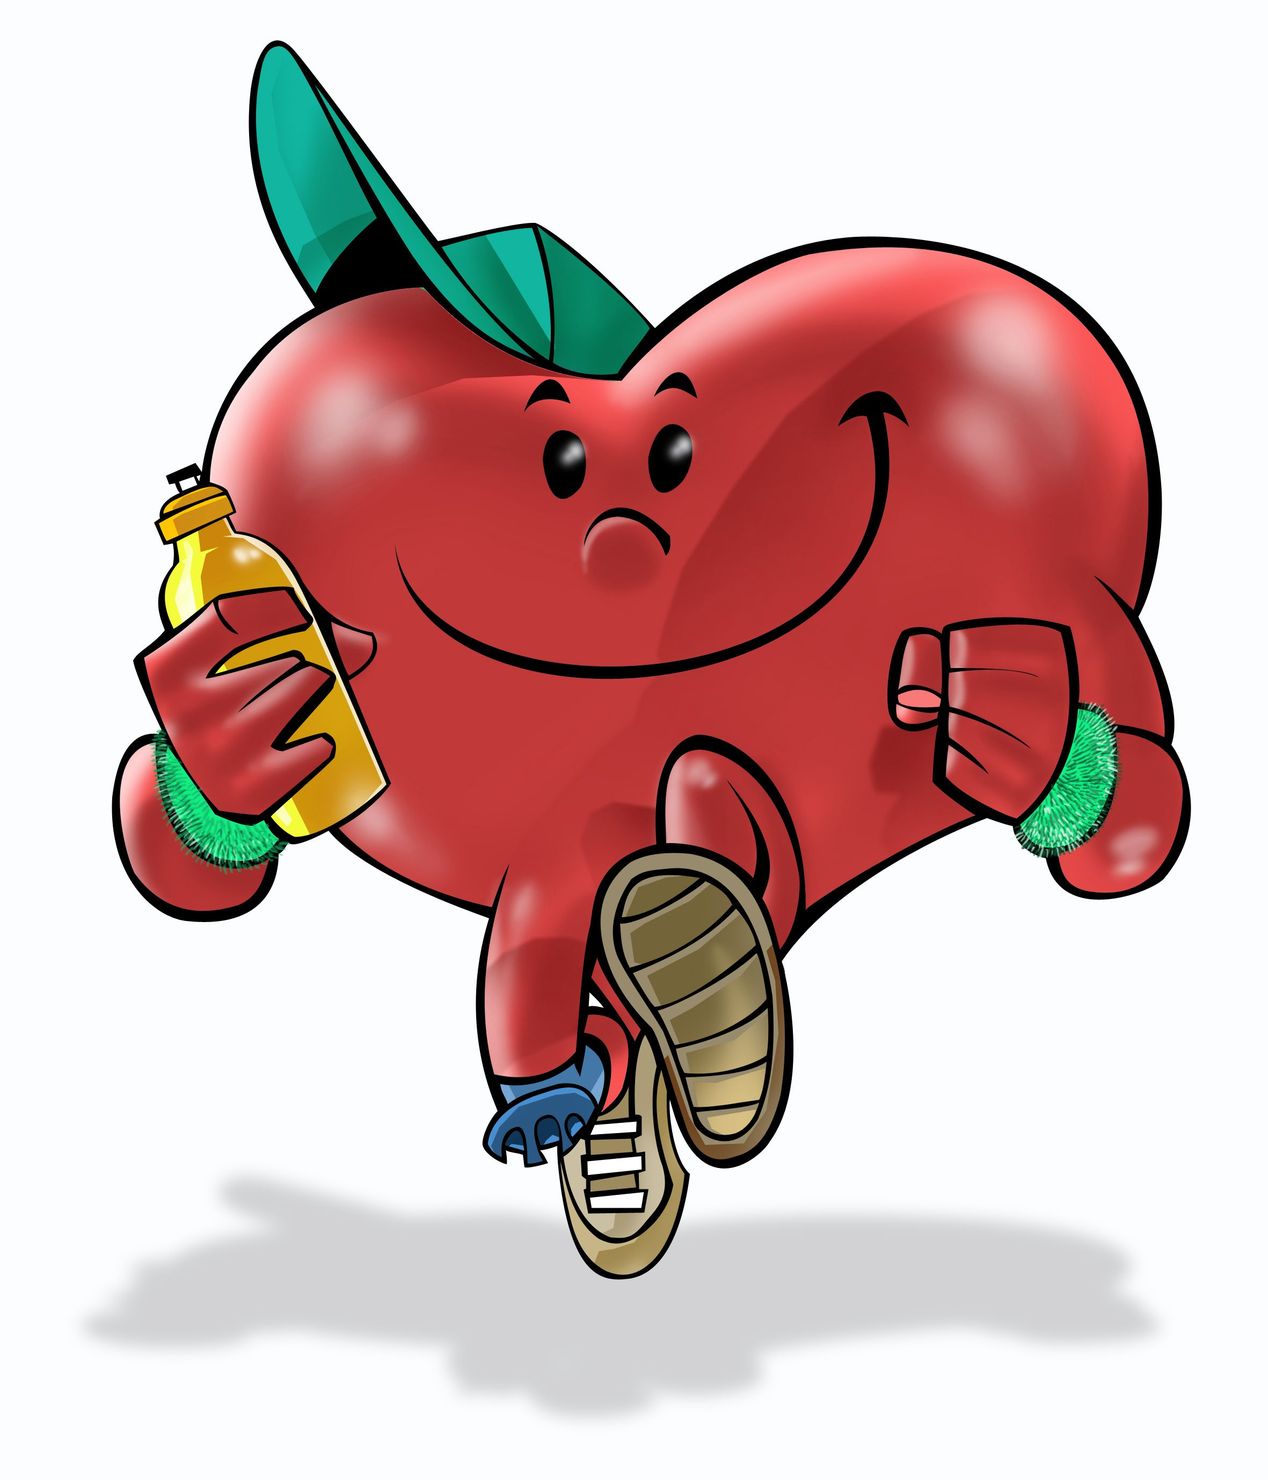 Cartoon of exercising heart